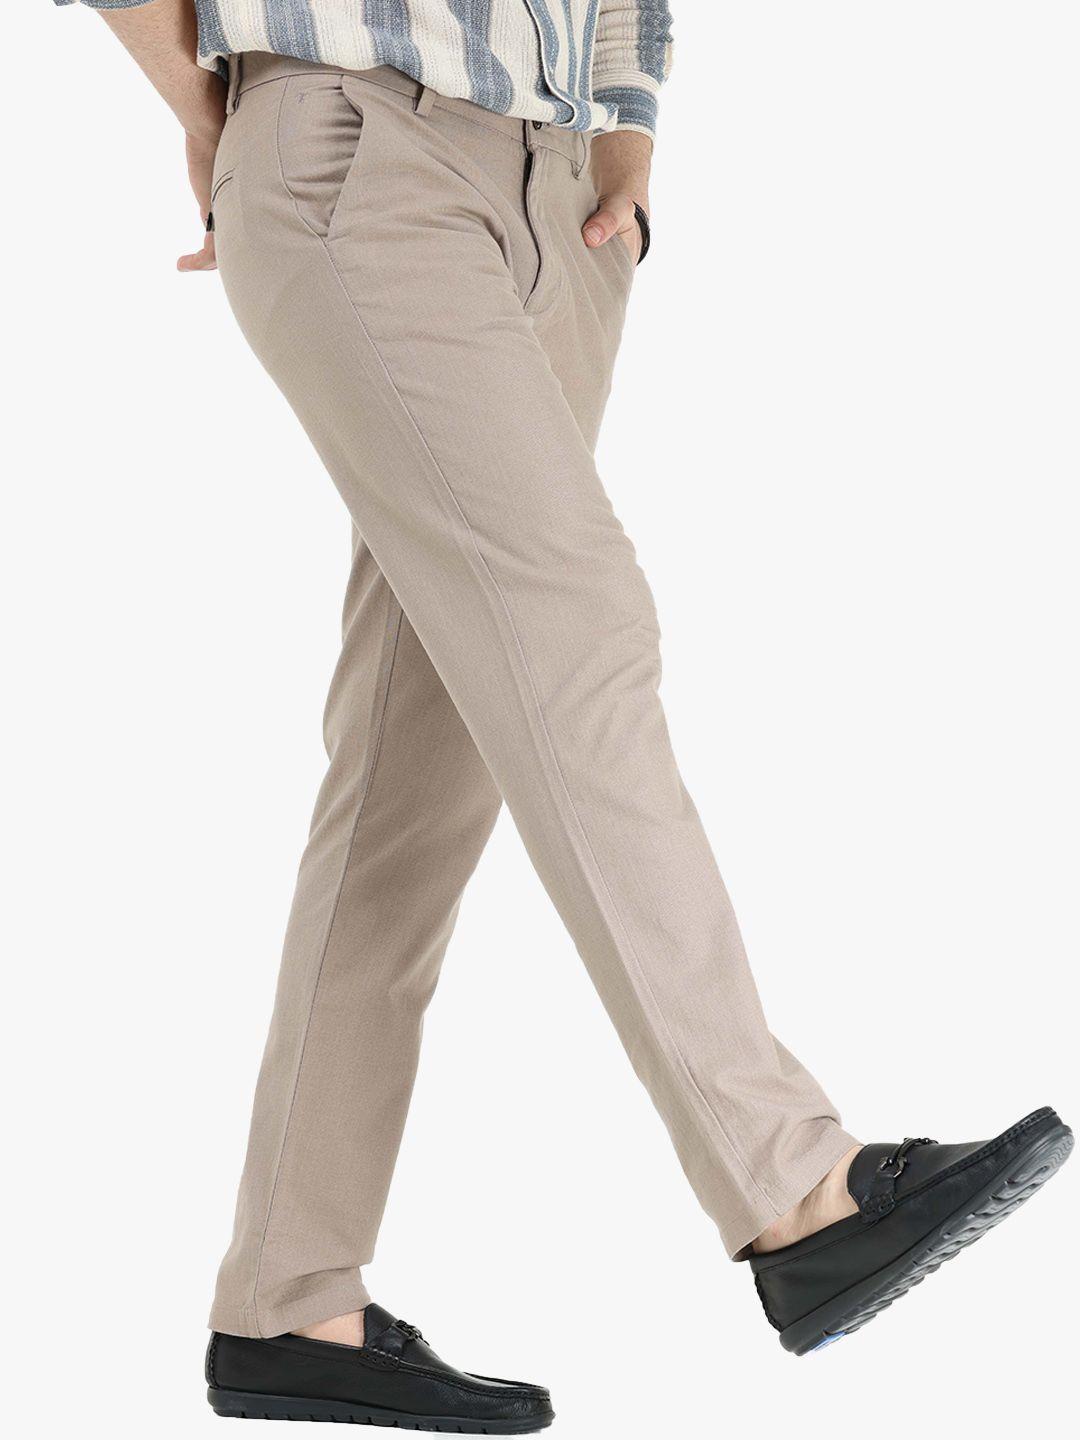 tailoraedge men mid-rise cotton tailored slim fit chinos trousers